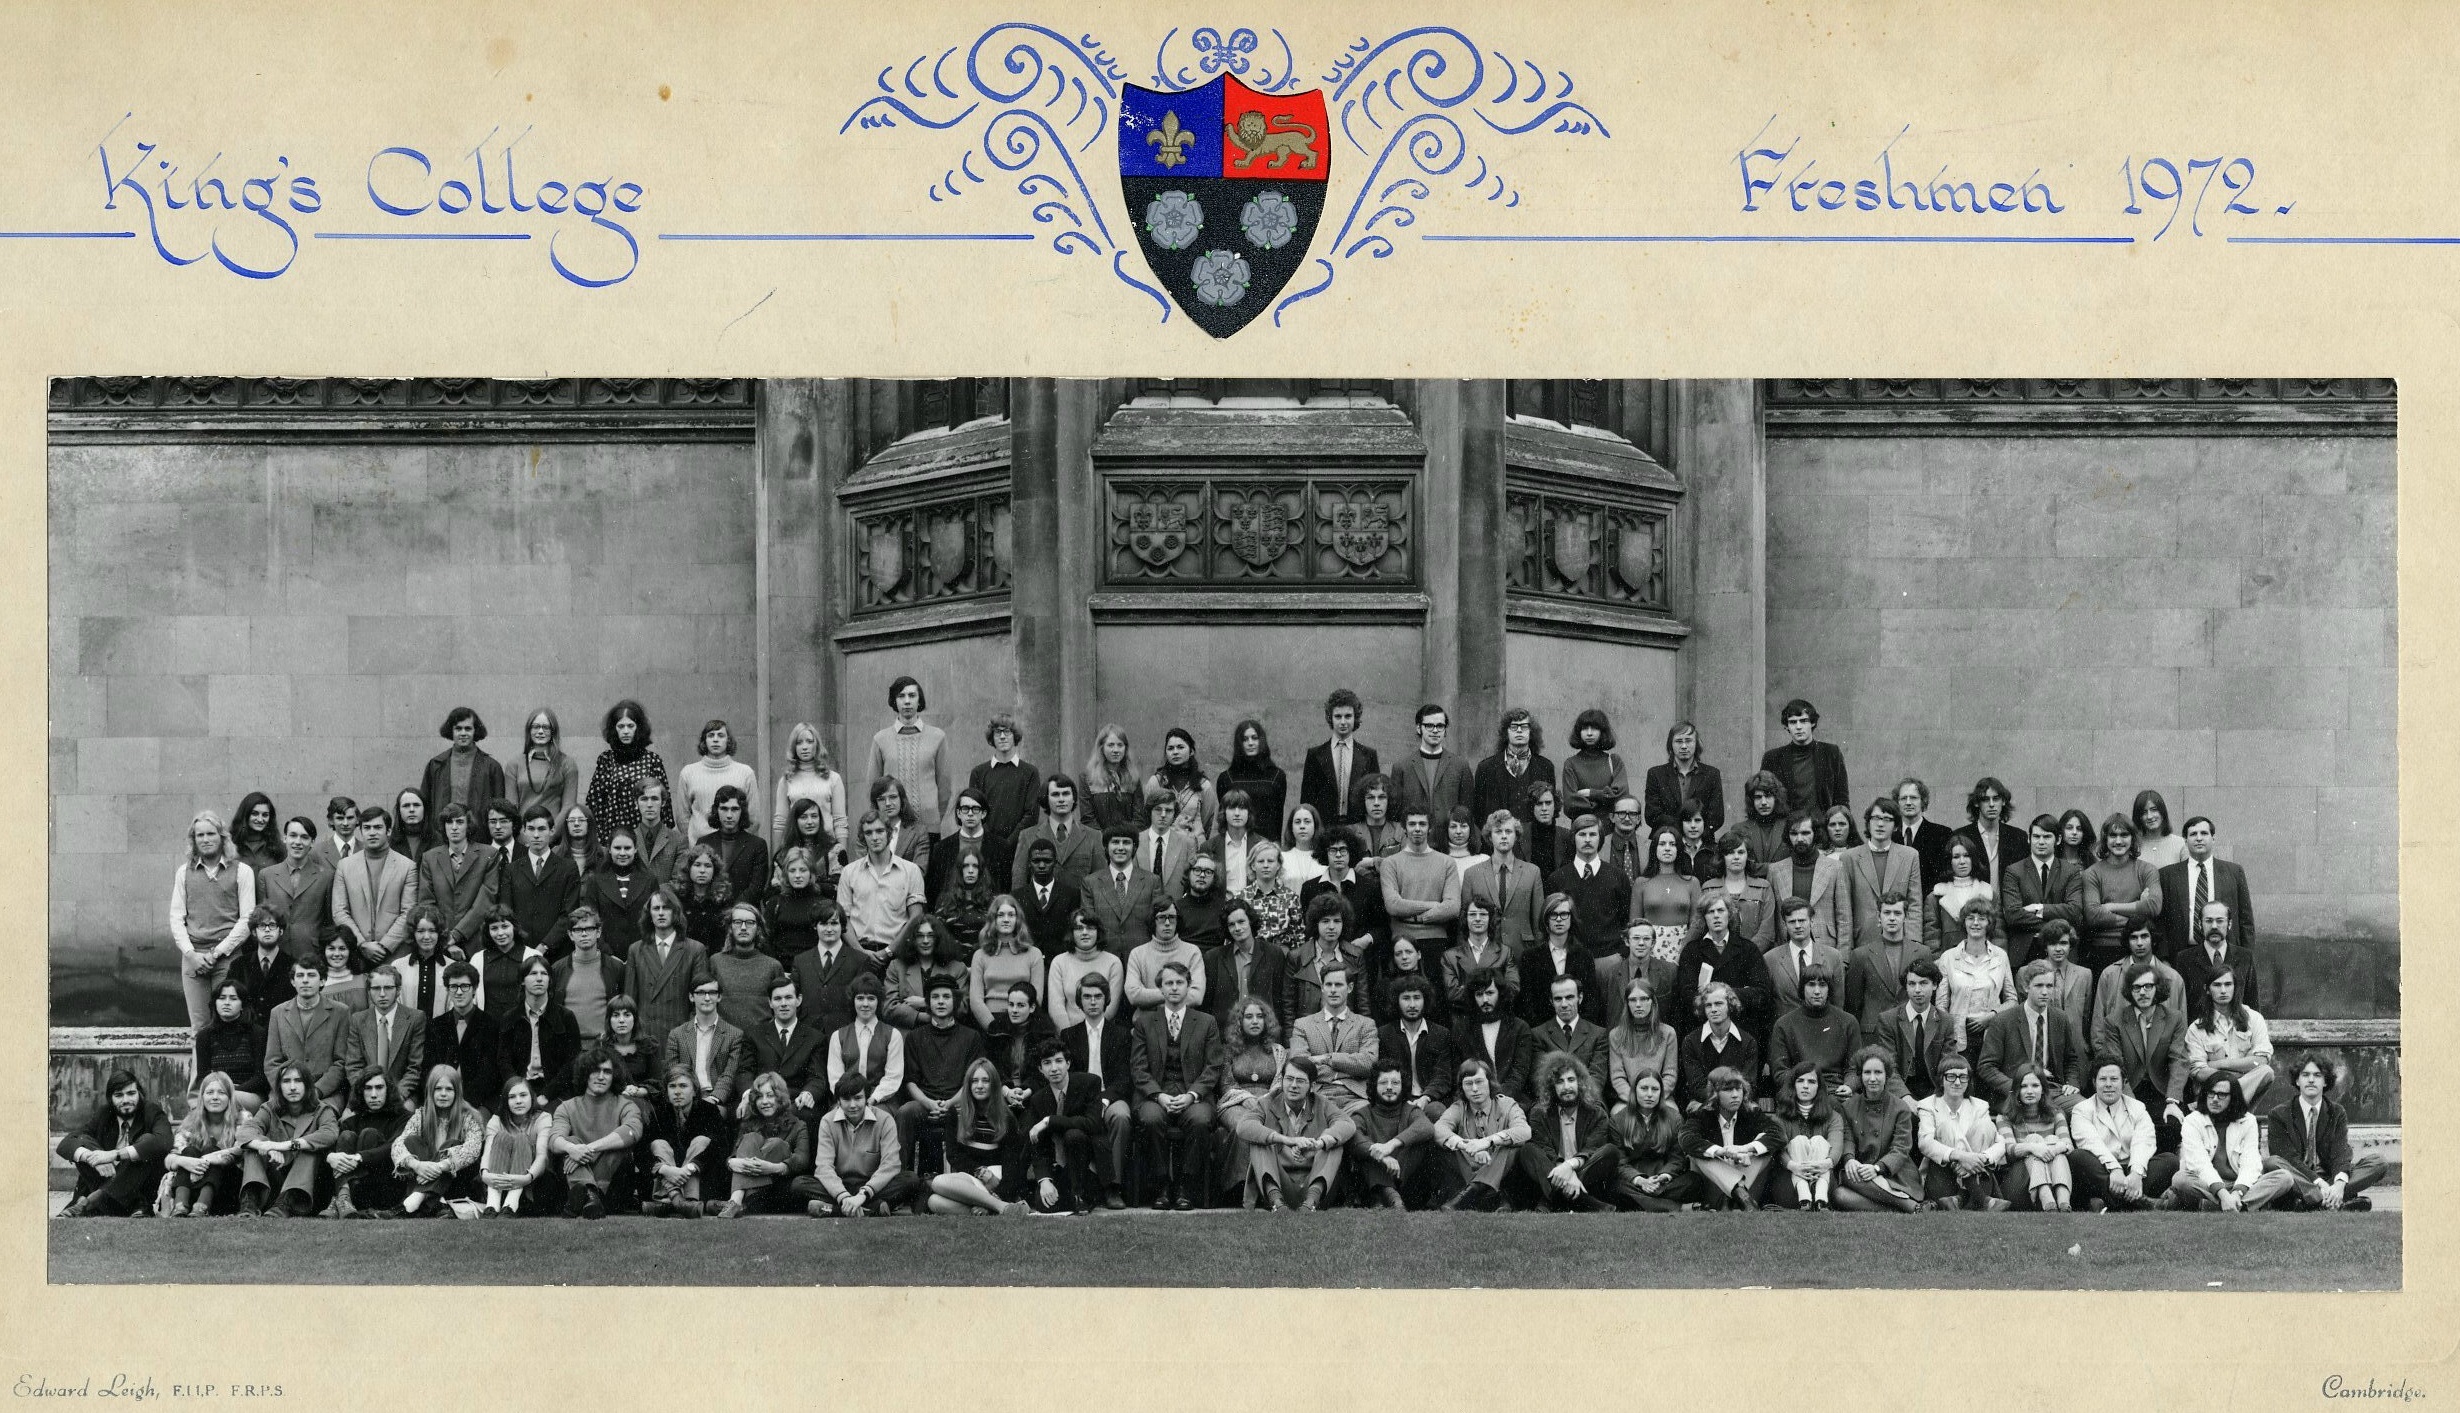 1972 Matriculation Photo